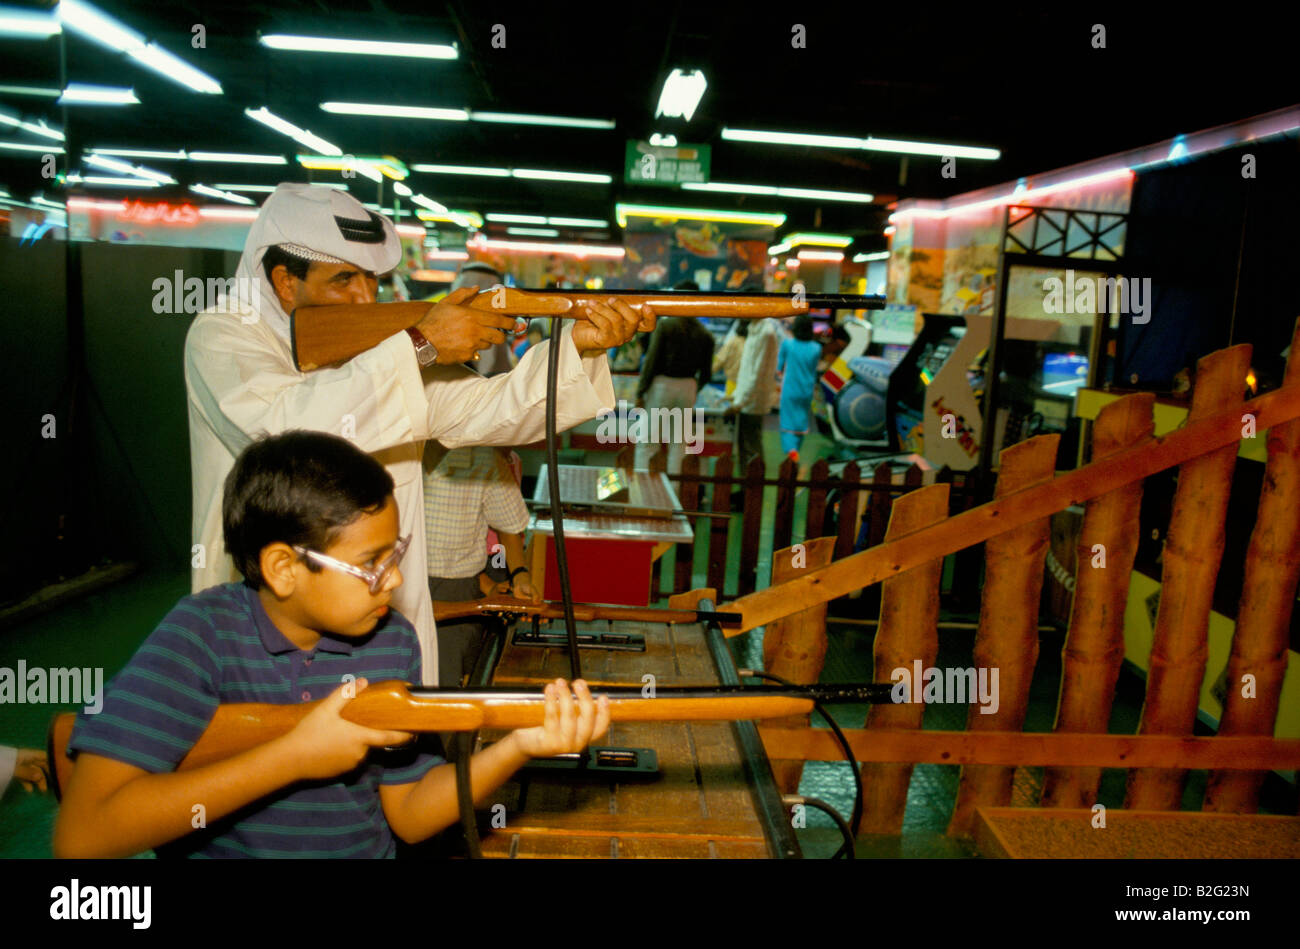 a boy and a man shooting toy guns, sinbads amusment centre, dubai Stock  Photo - Alamy